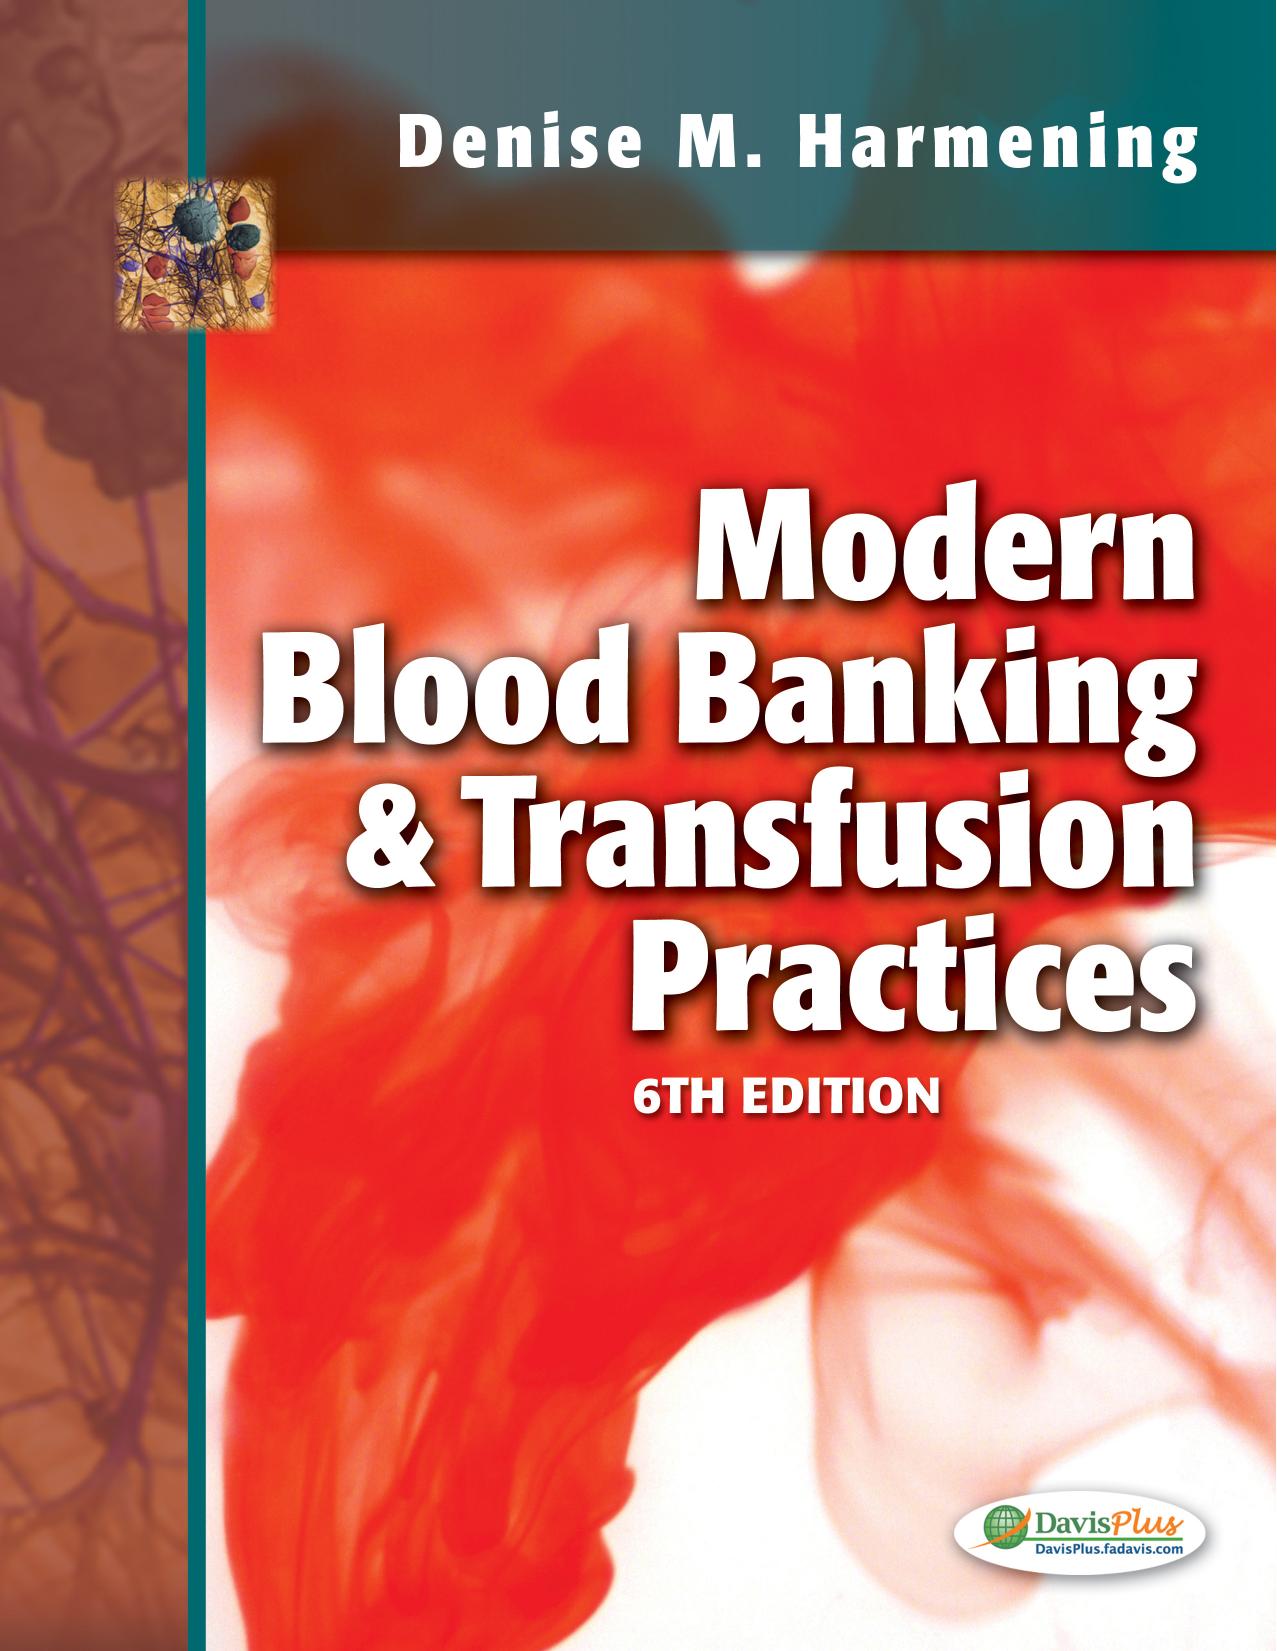 Modern Blood Banking & Transfusion Practices ed6 Harmening 6th ed.2012